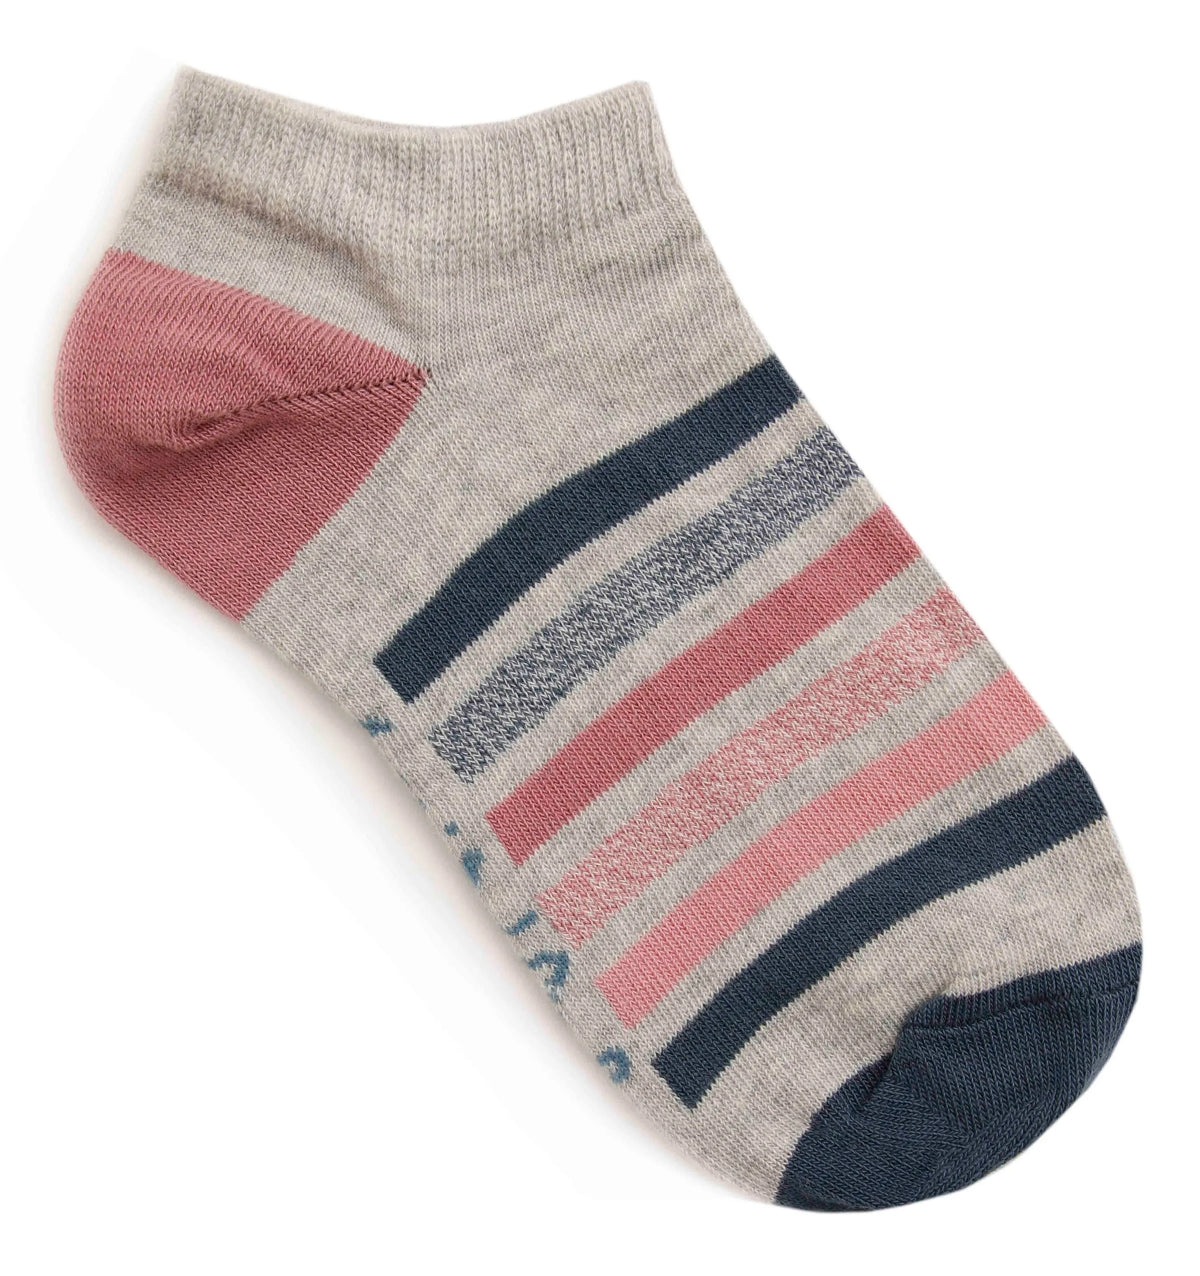 Women's Weird Fish Loretta trainer socks in Grey with a stripe pattern.